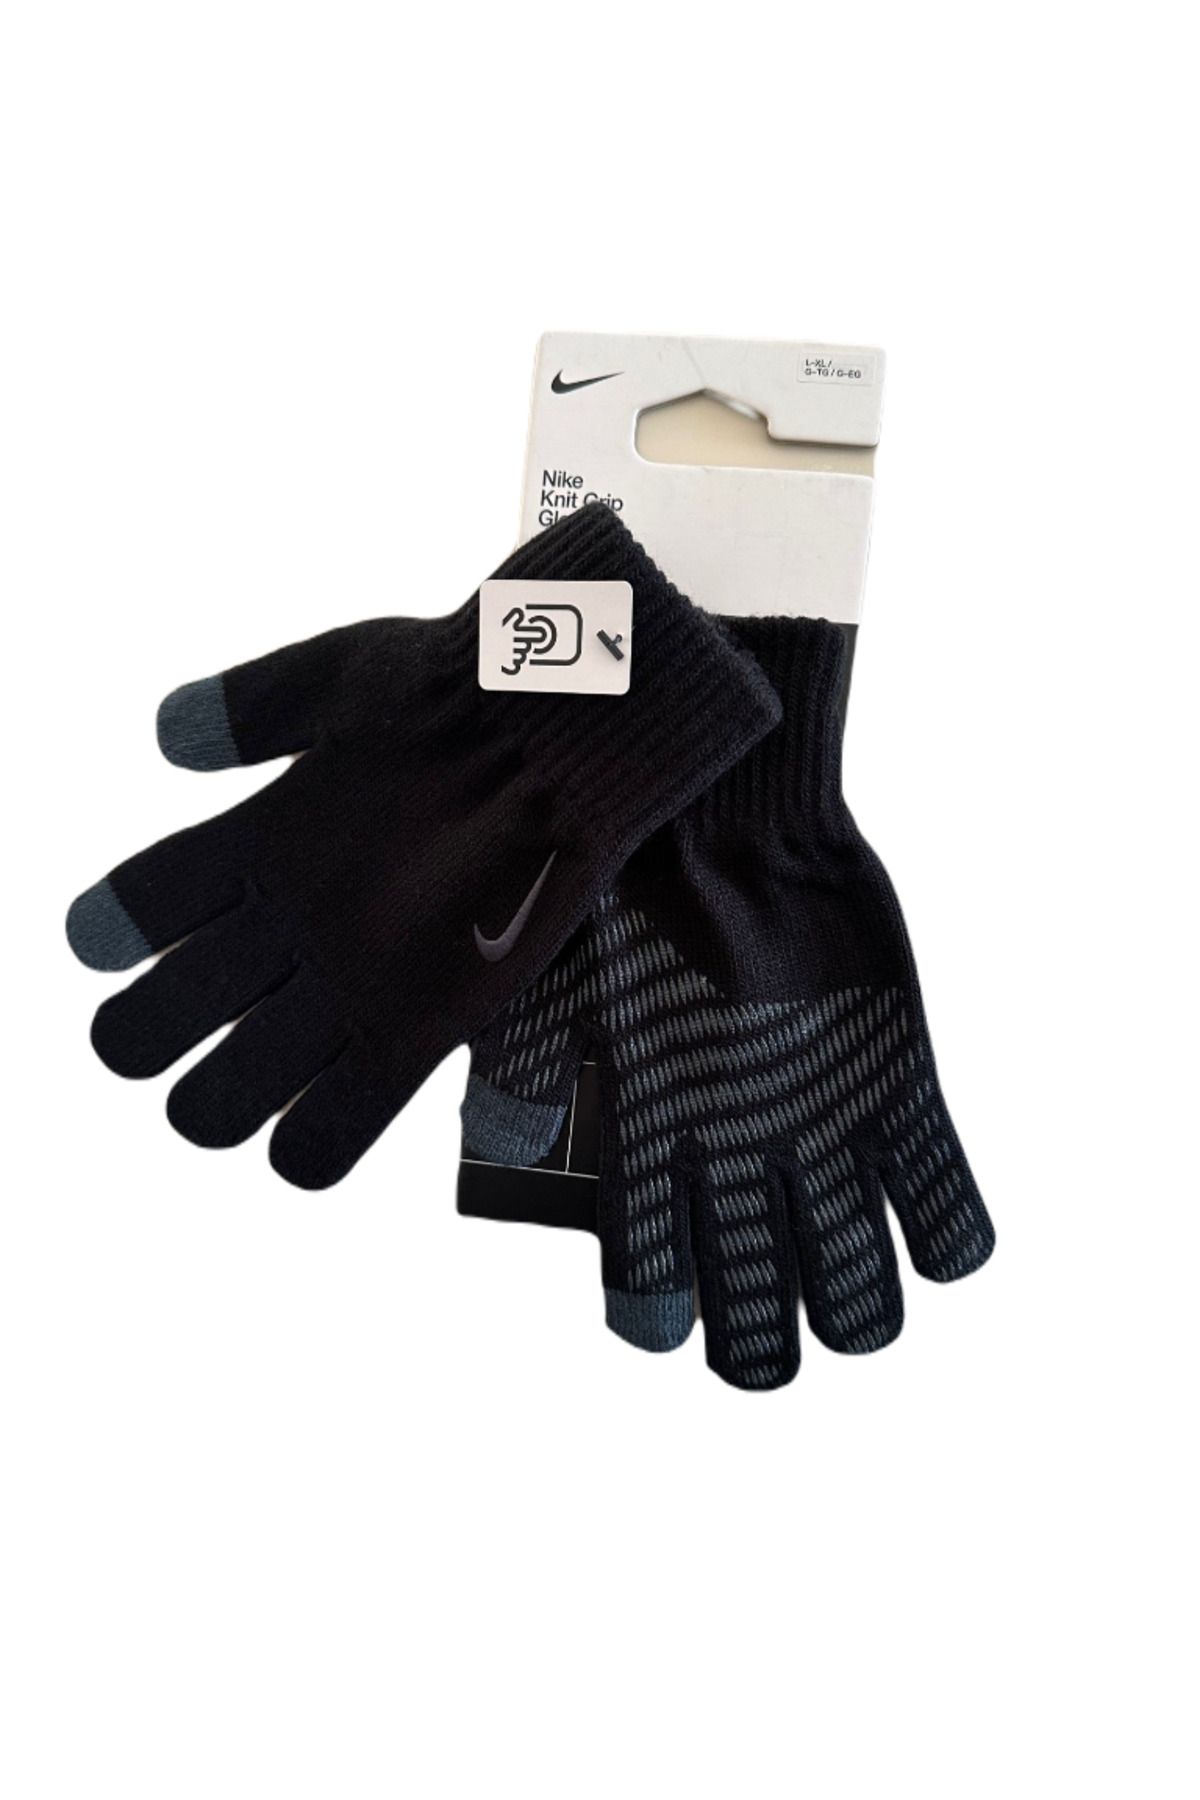 Nike Knit Grip Gloves çocuk eldiven